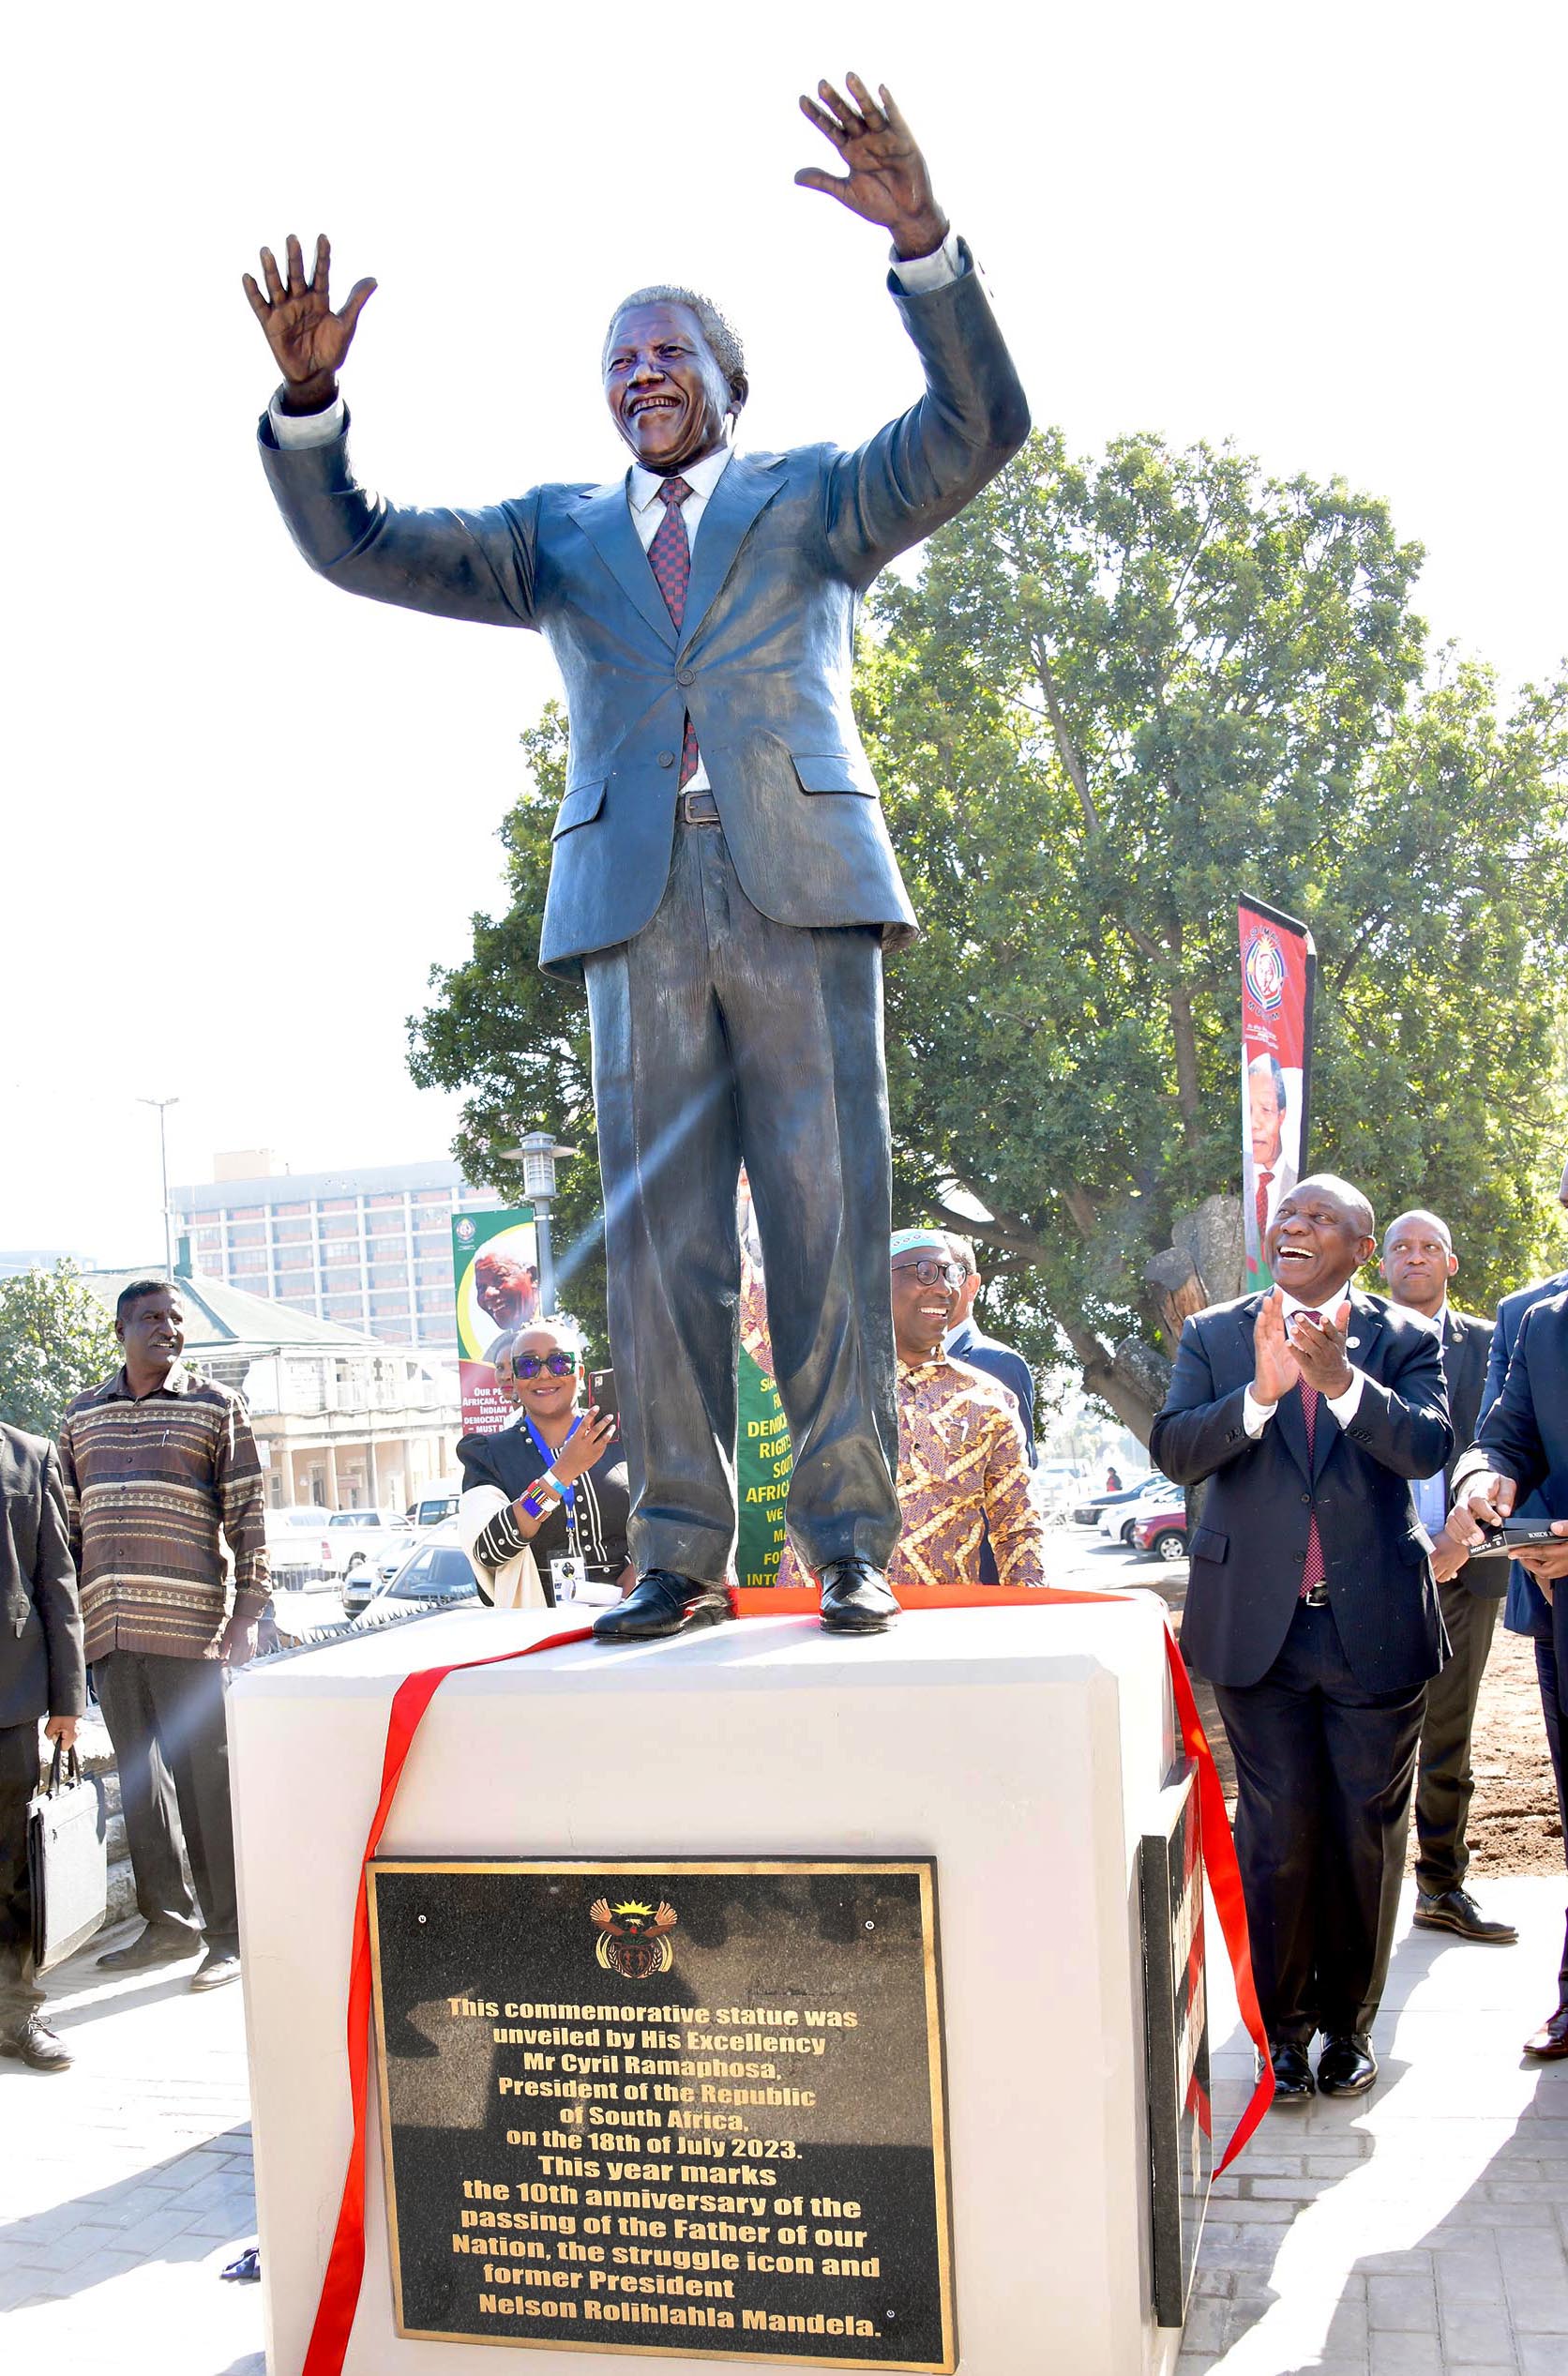 Let’s build the world the Mandela way: Guterres